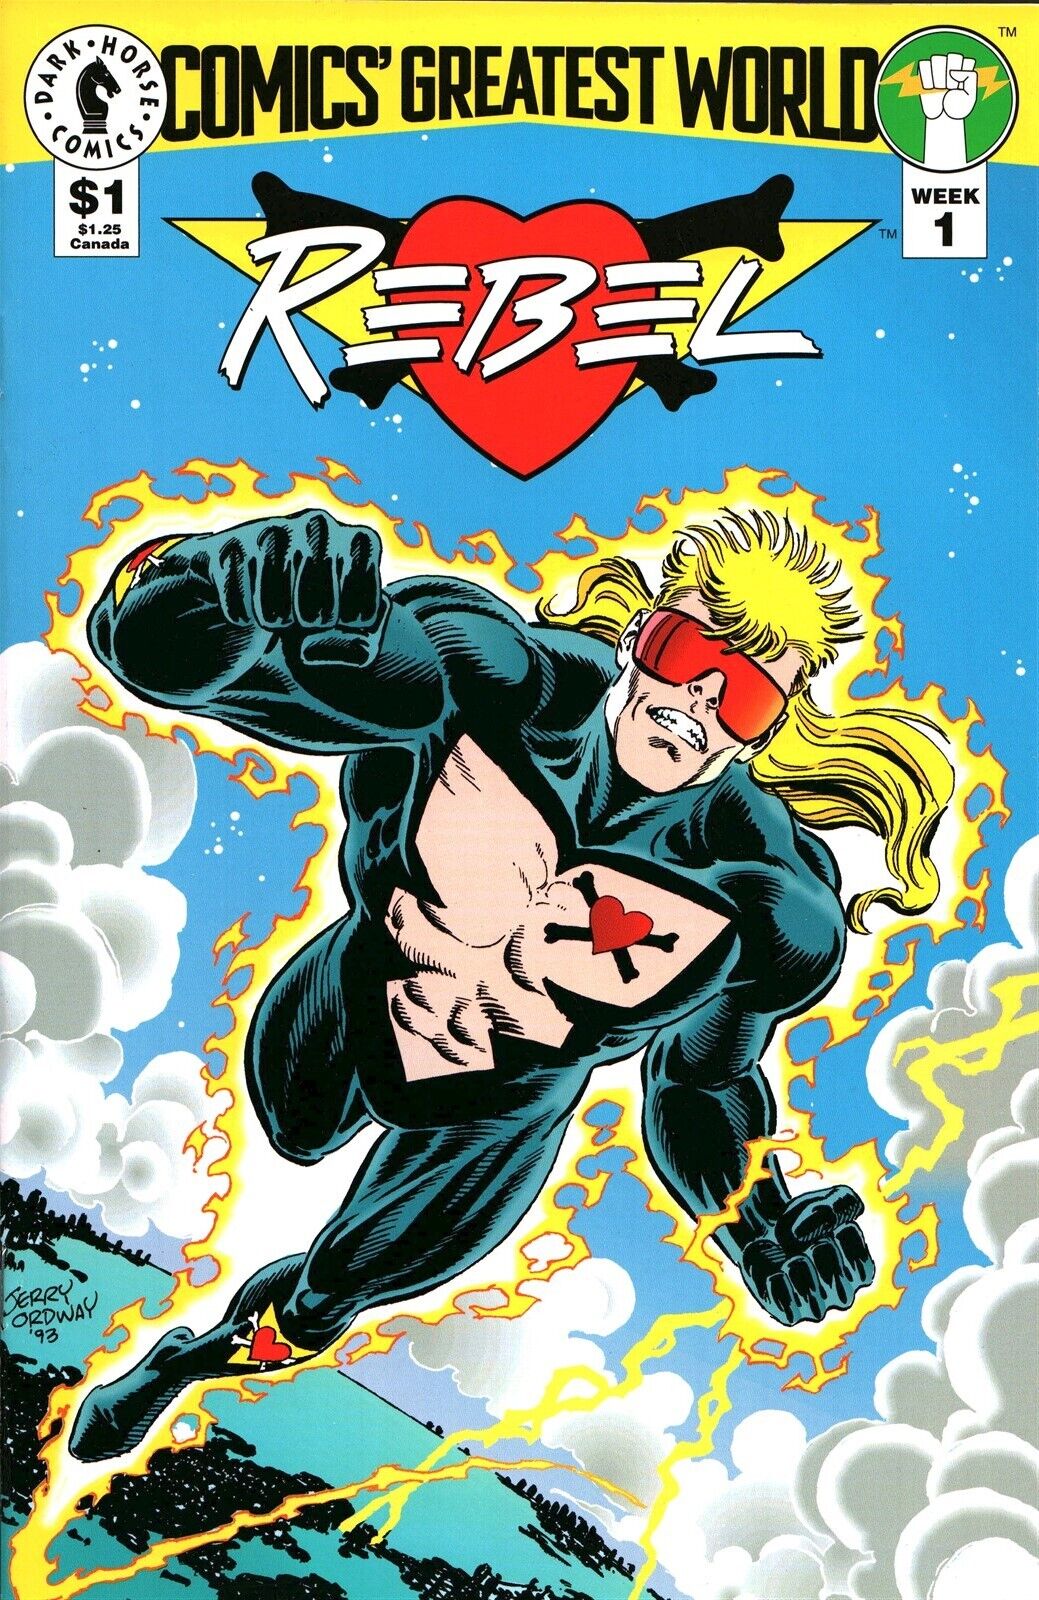 VTG Dark Horse Comics Comics Greatest World Rebel #1A Comic Book 1993 High Grade